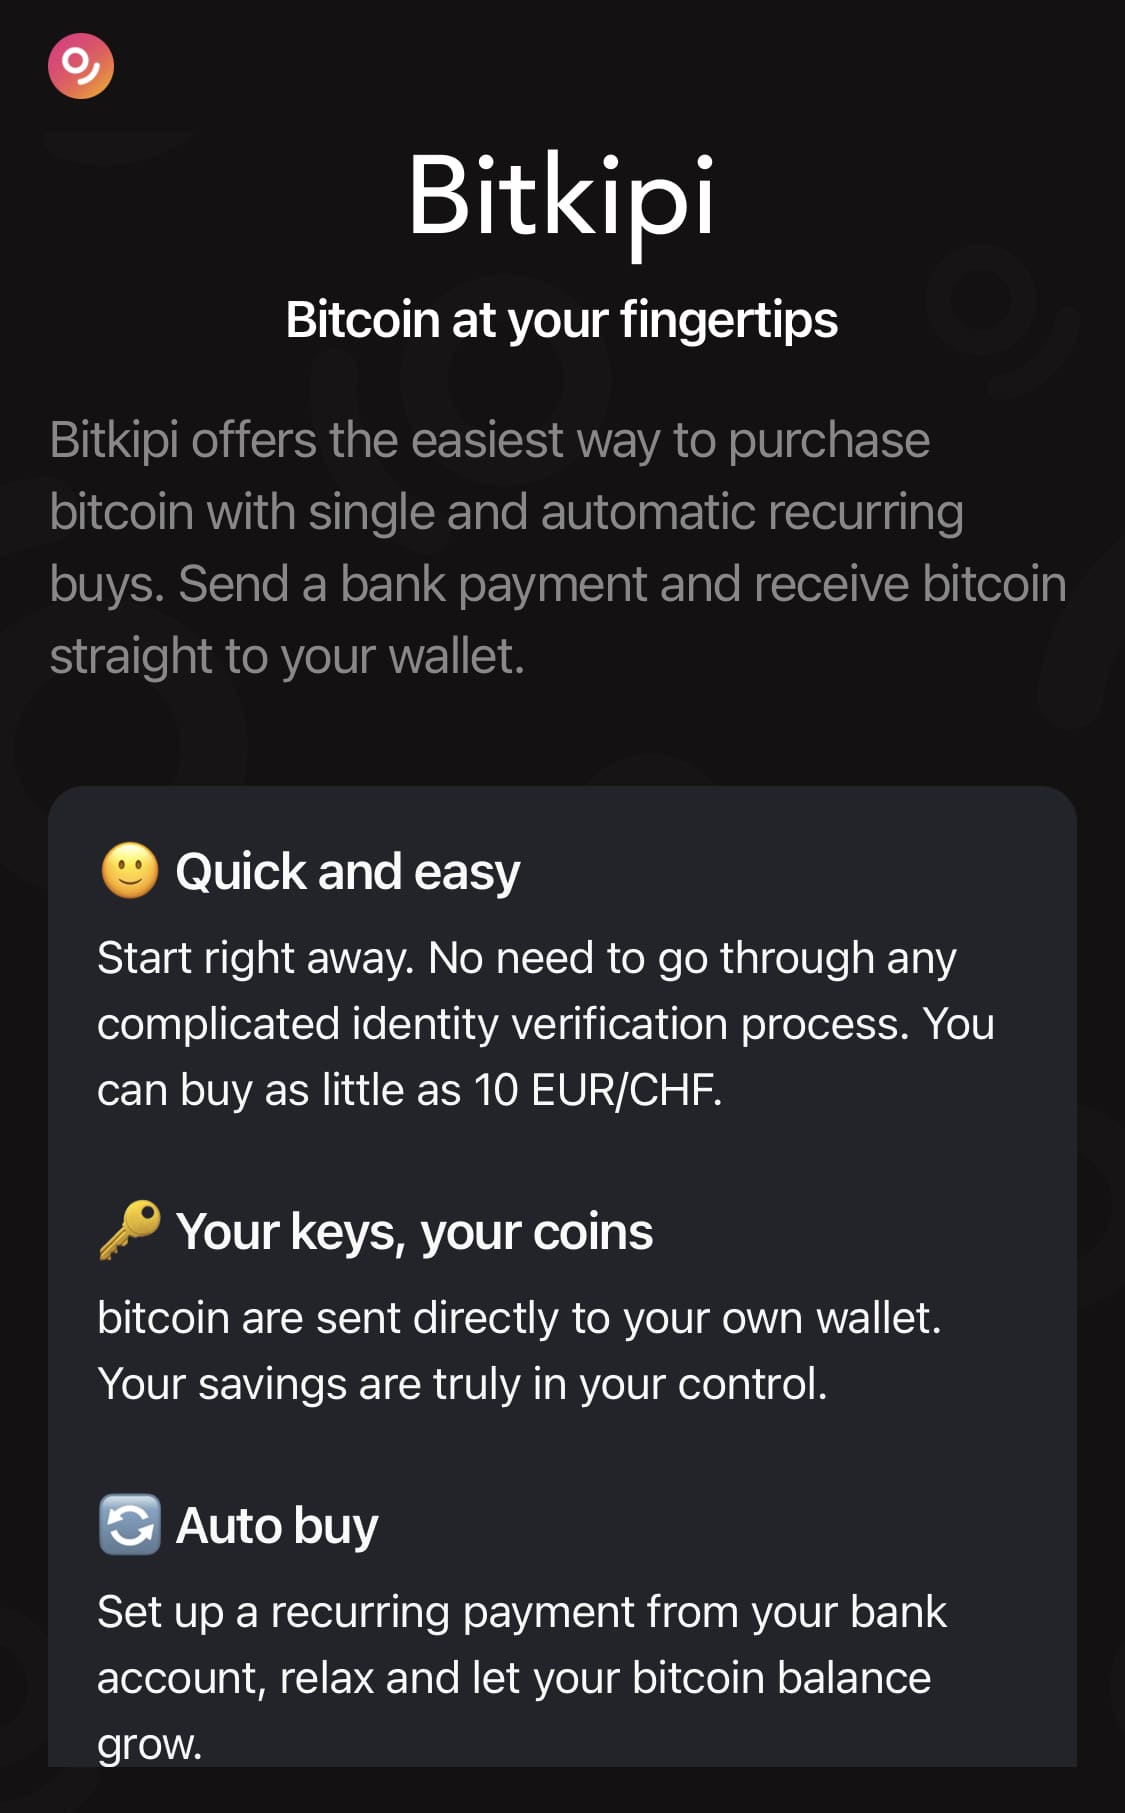 con Bitkipi podemos comprar bitcoins de forma anónima